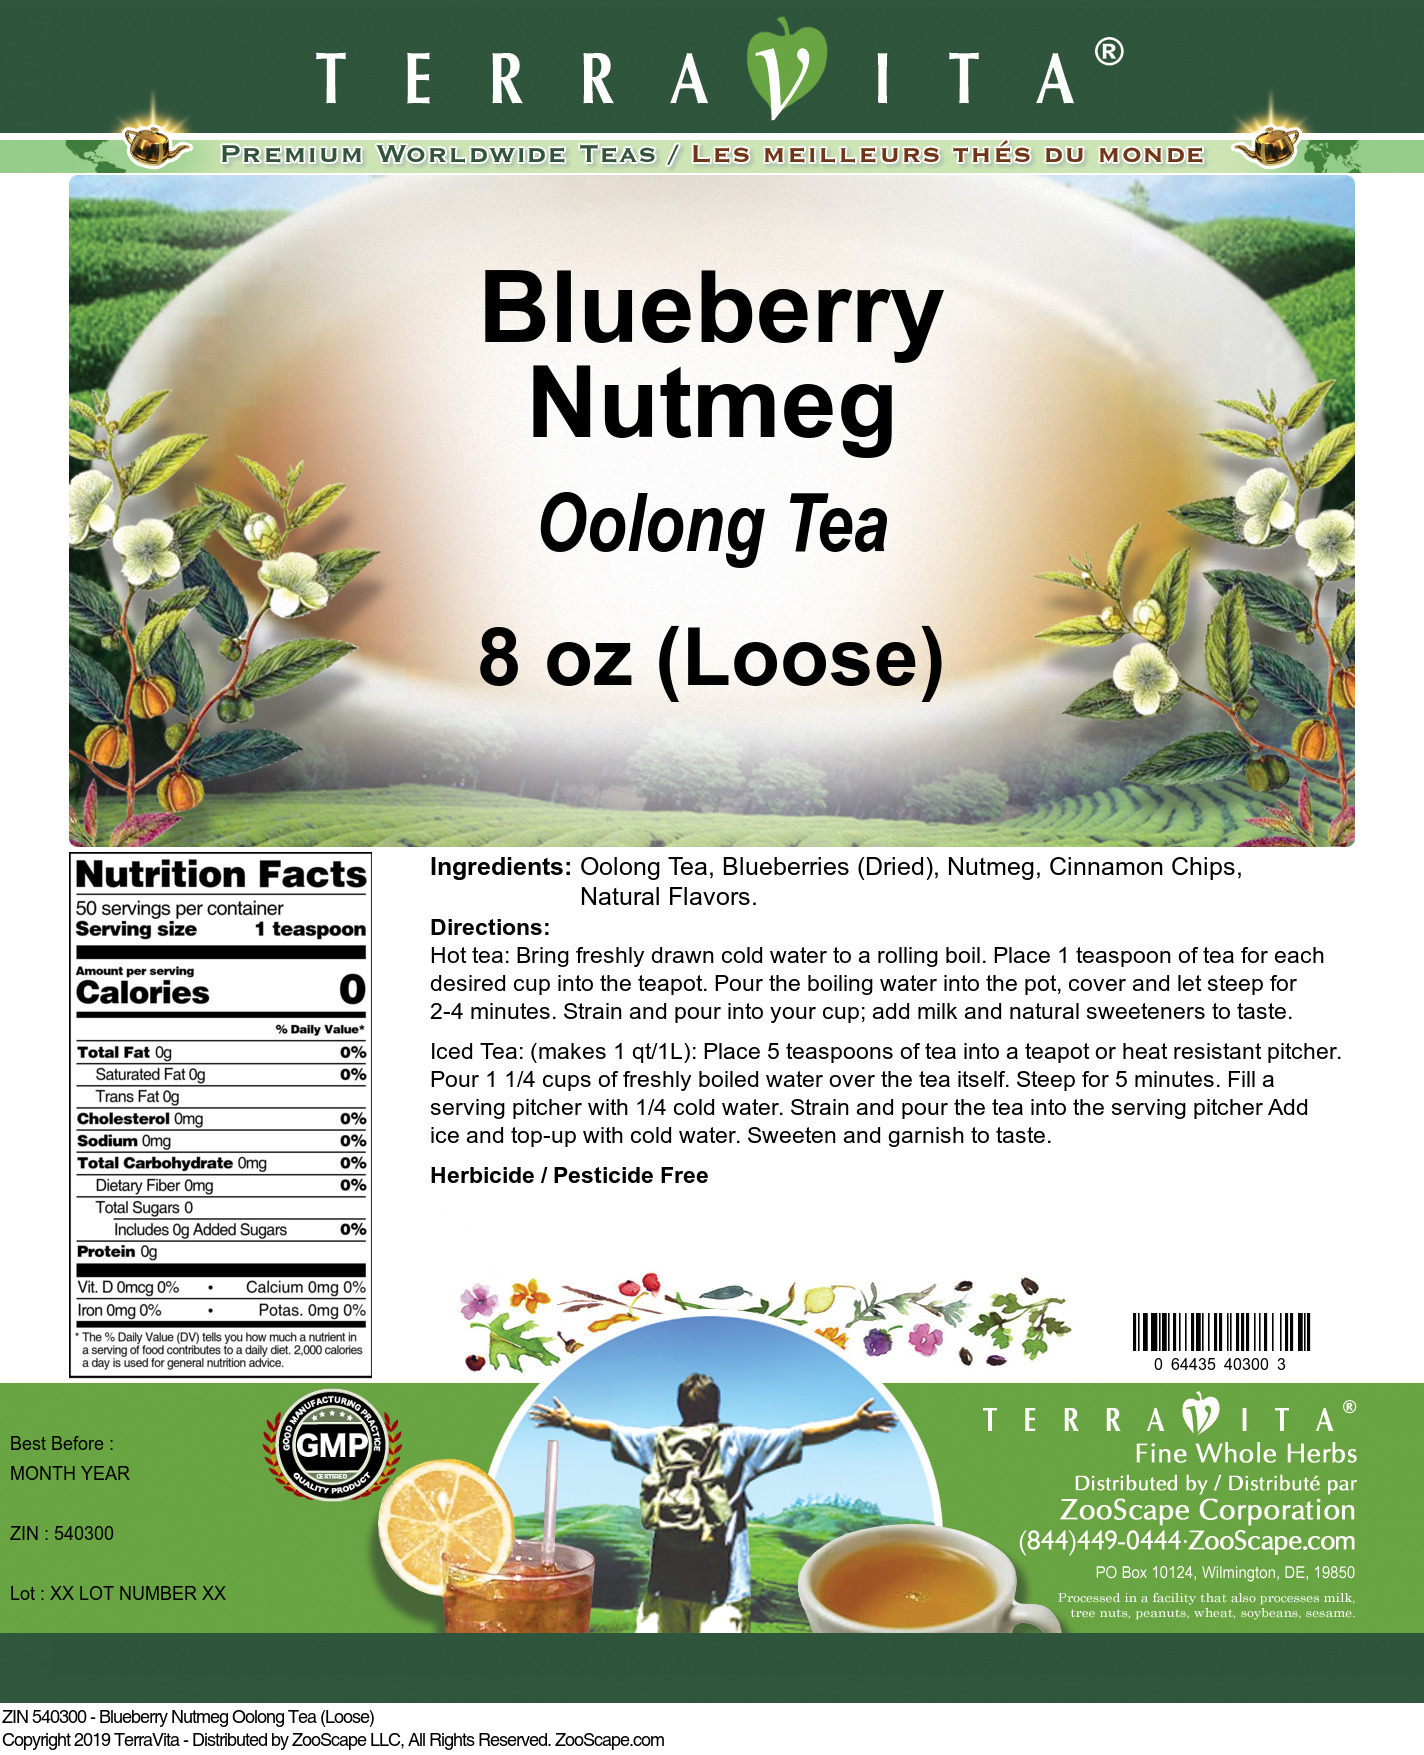 Blueberry Nutmeg Oolong Tea (Loose) - Label